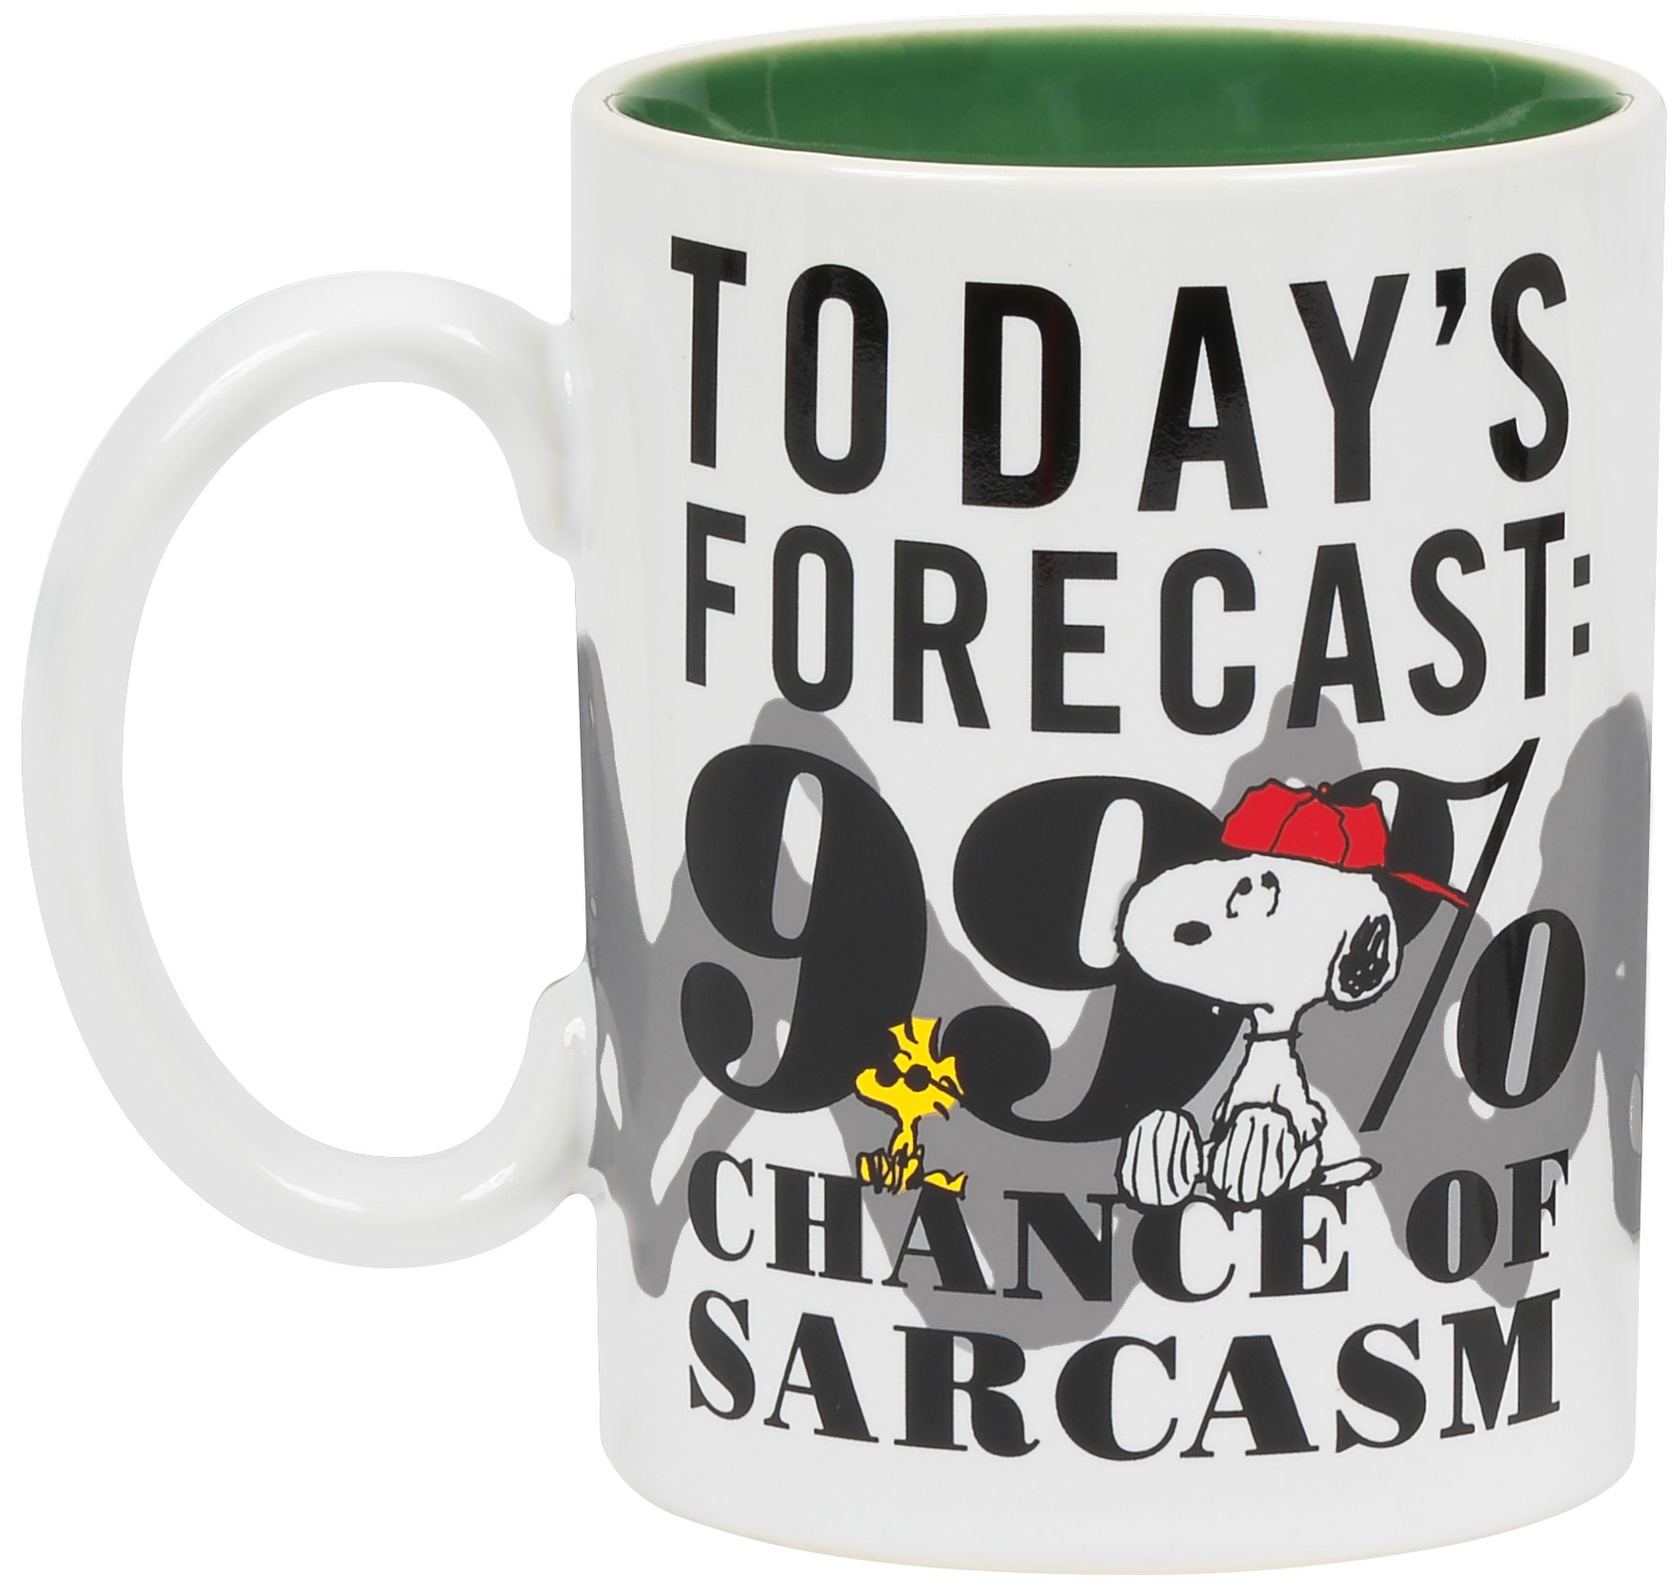 Peanuts by Department 56 6002591 99% Chance of Sarcasm Mug